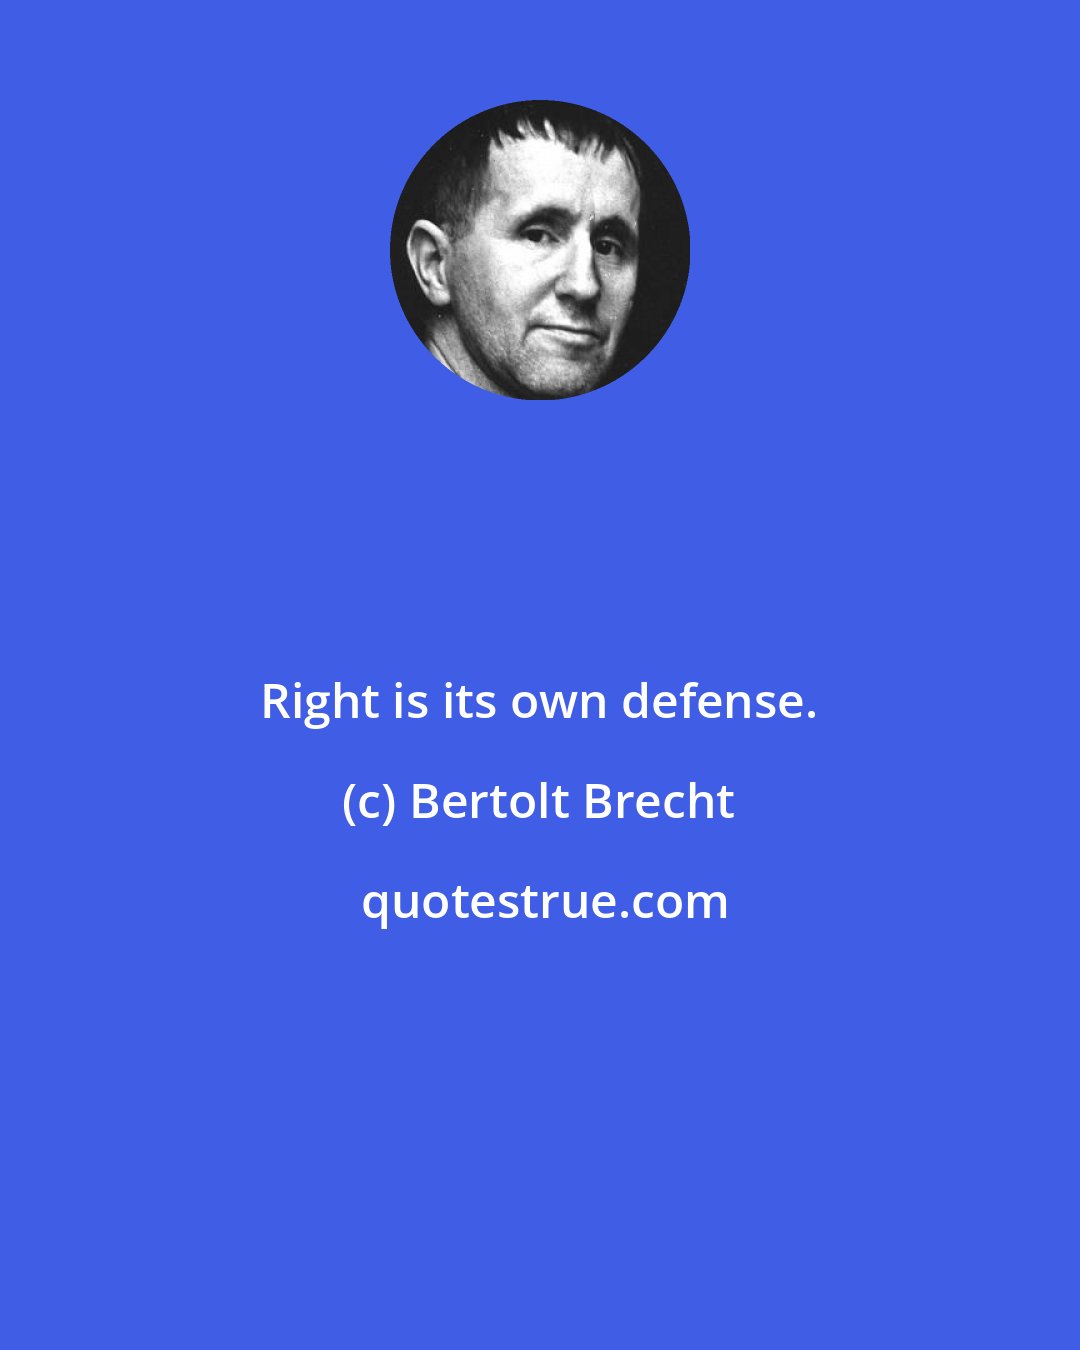 Bertolt Brecht: Right is its own defense.